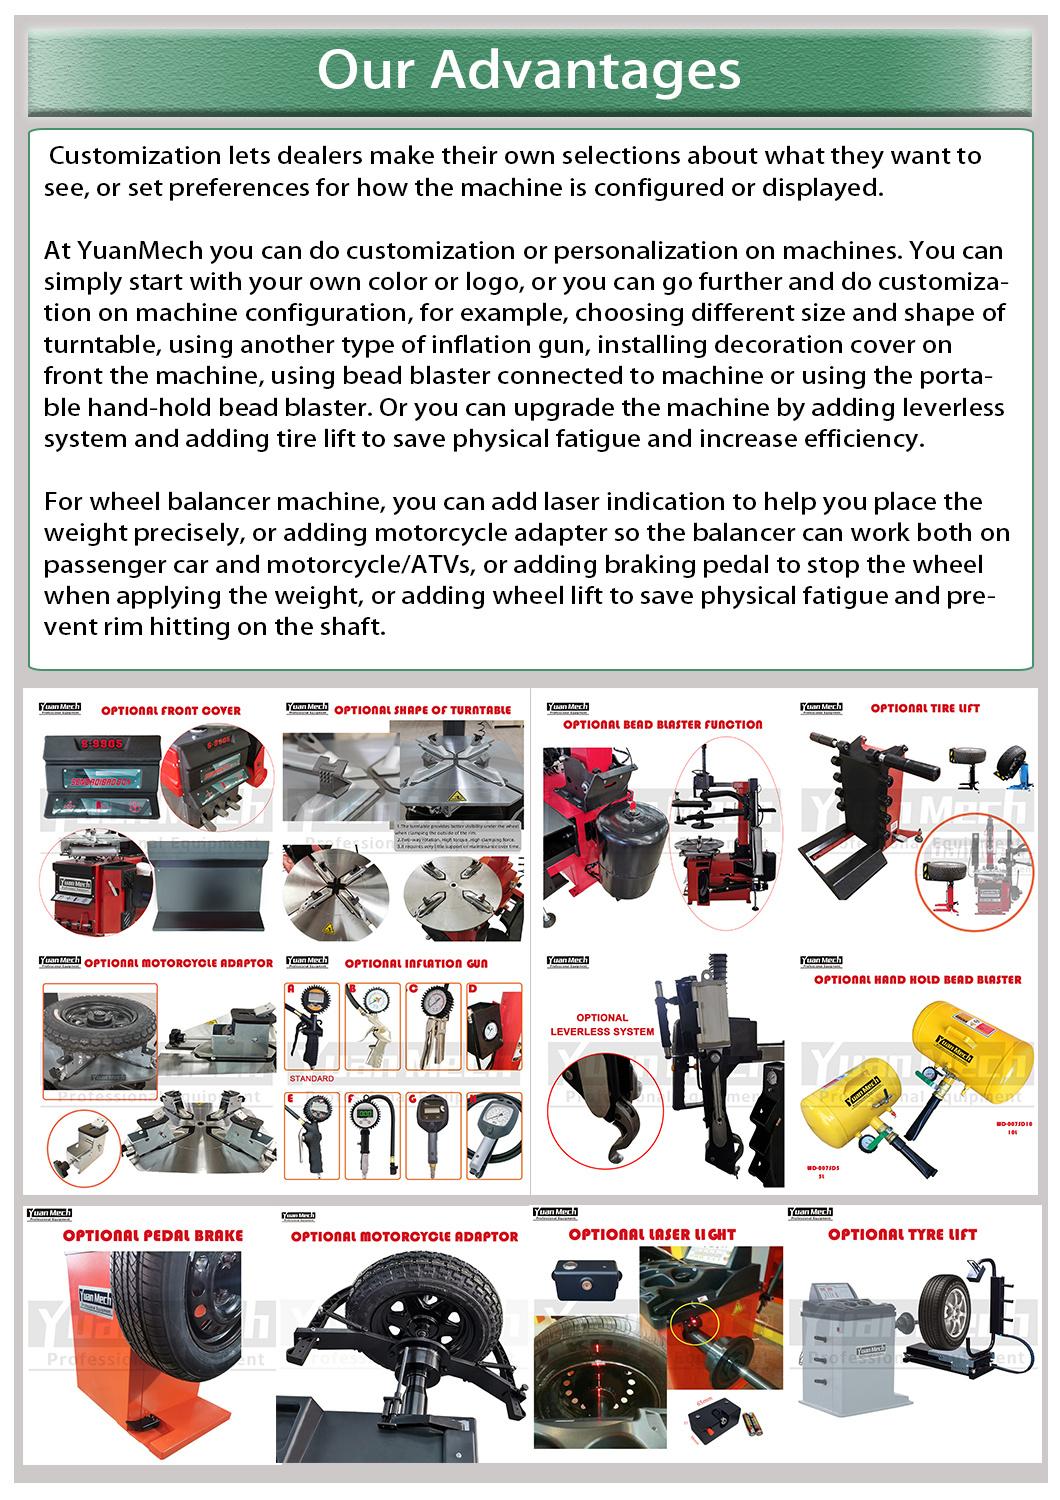 Automotive Garage Equipment of Vehicle Repair Equipment Tools